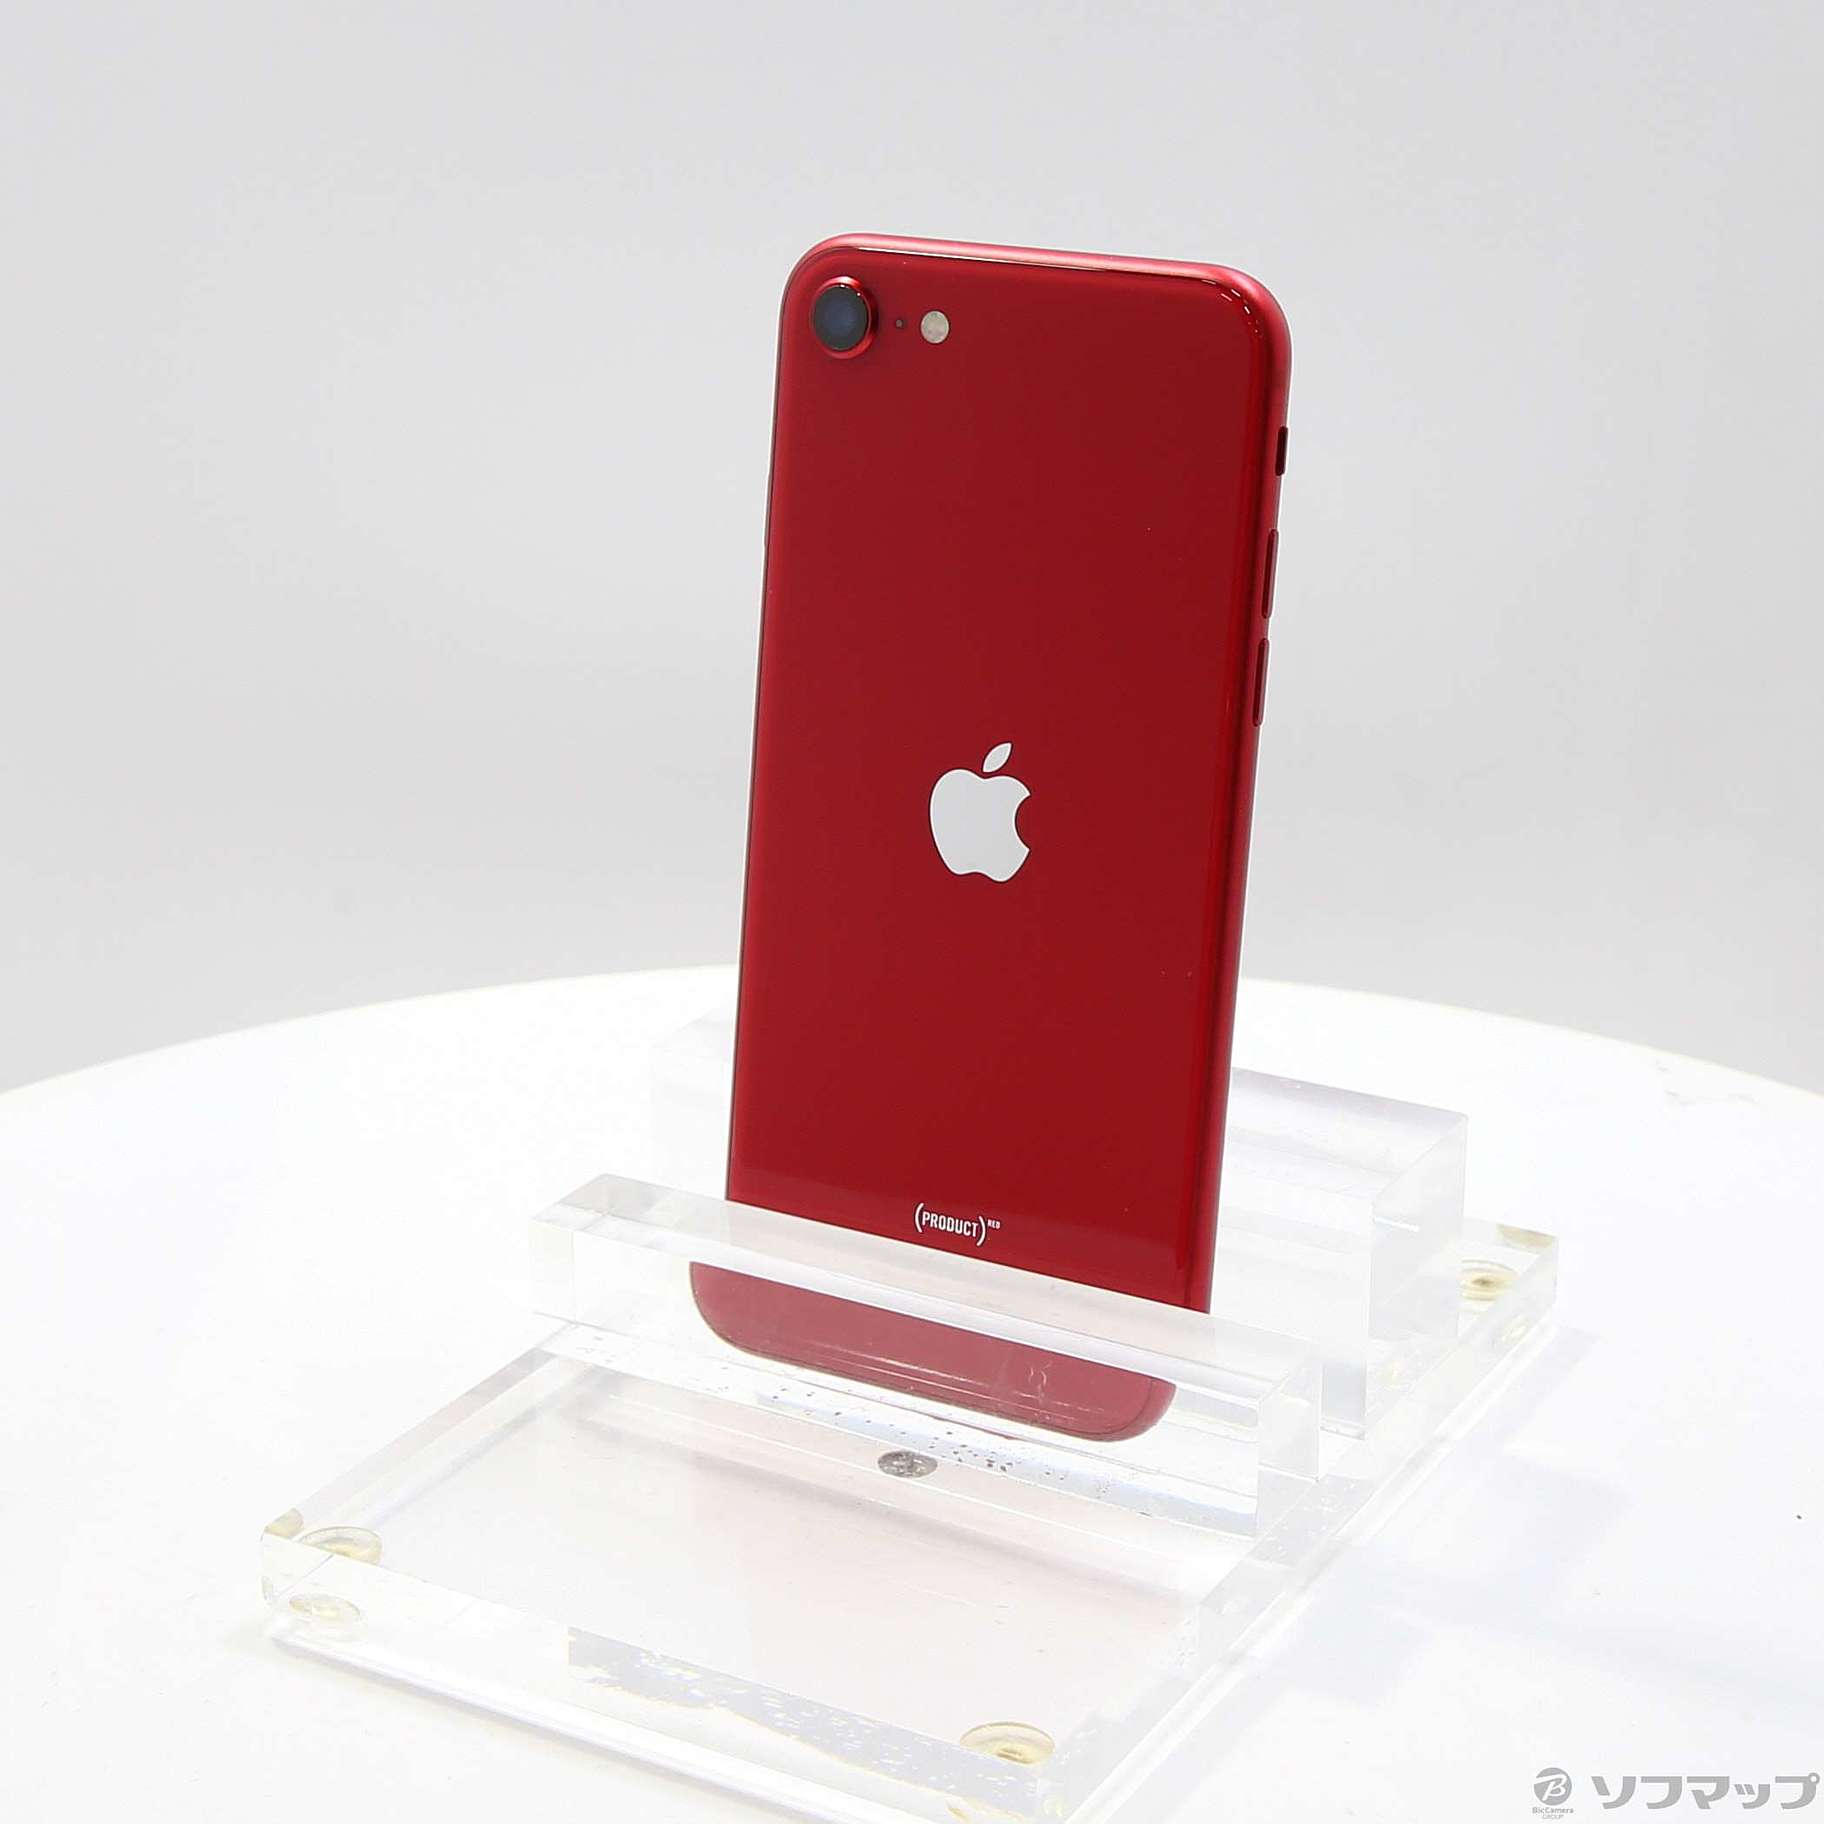 iPhone SE (第2世代) (PRODUCT)RED 64GB SIMフリー [レッド] 中古(白